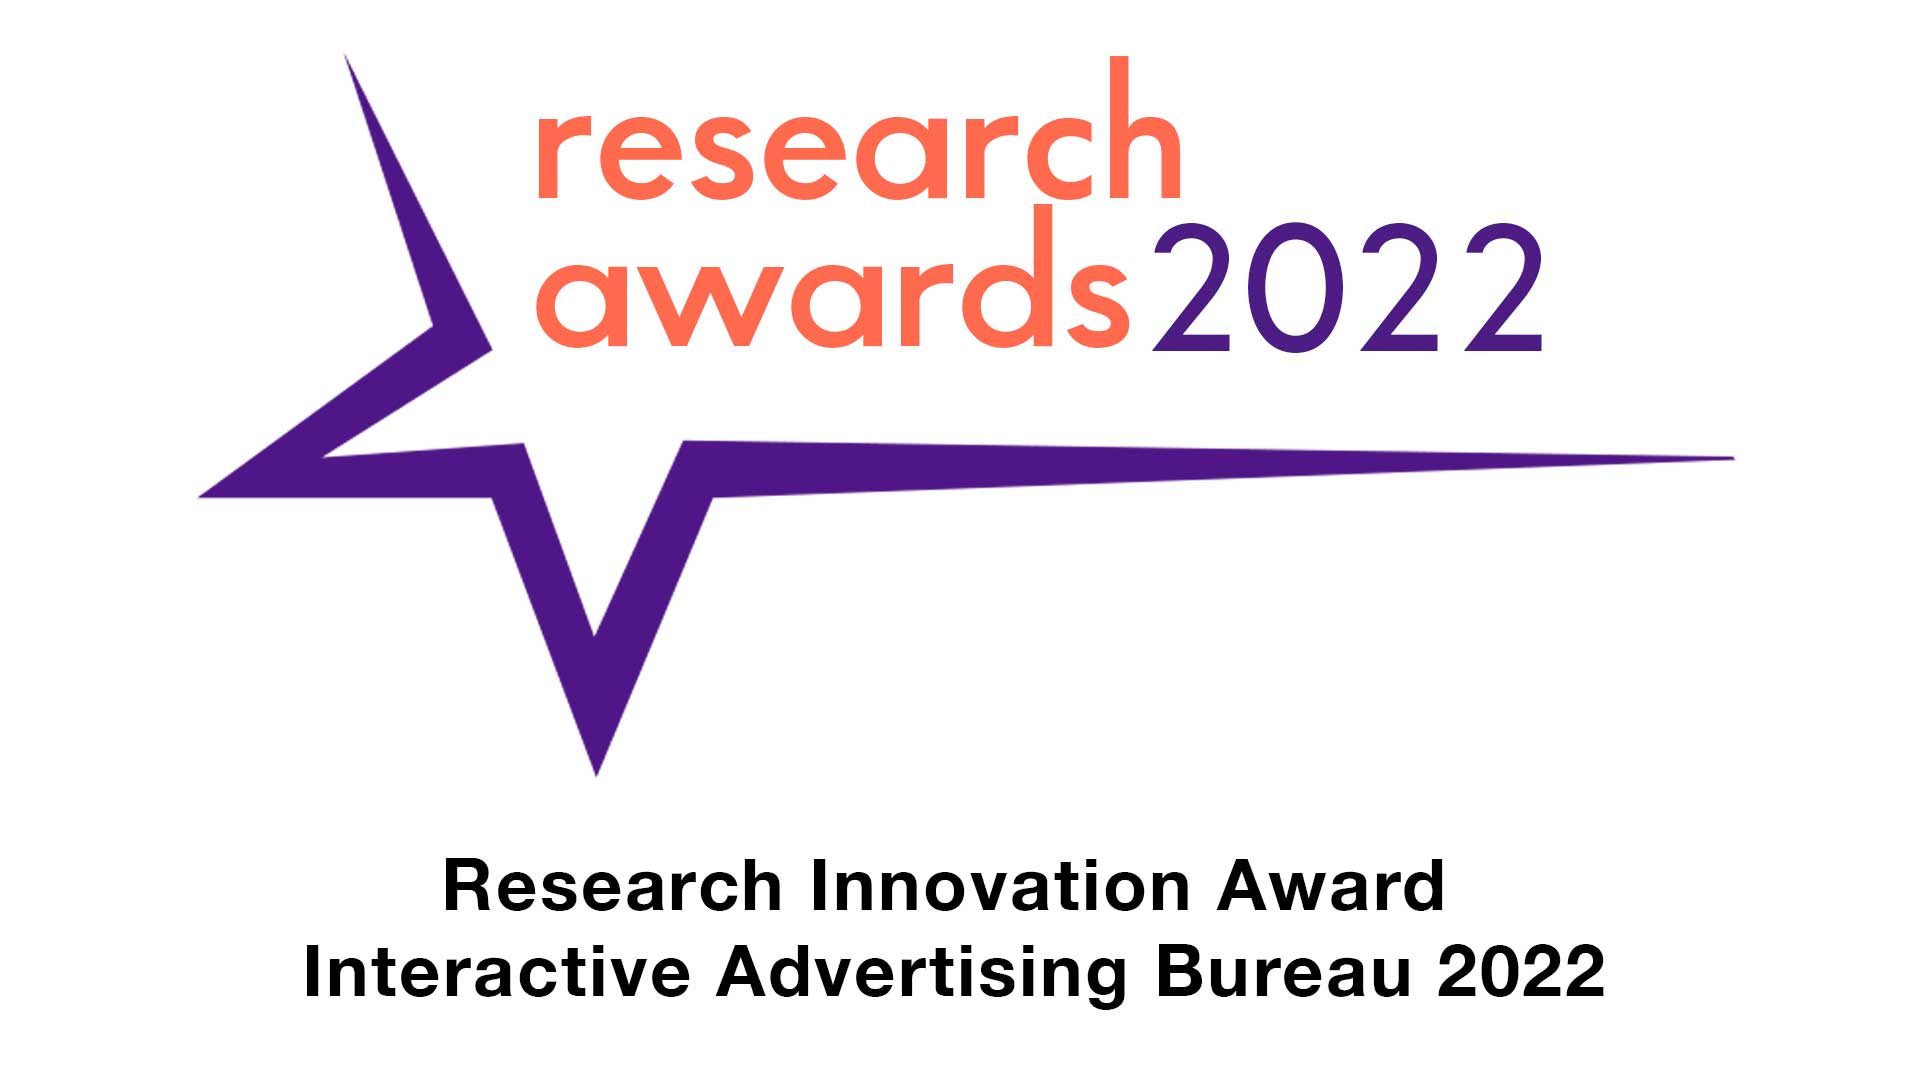 IAB Research Innovation Award 2022